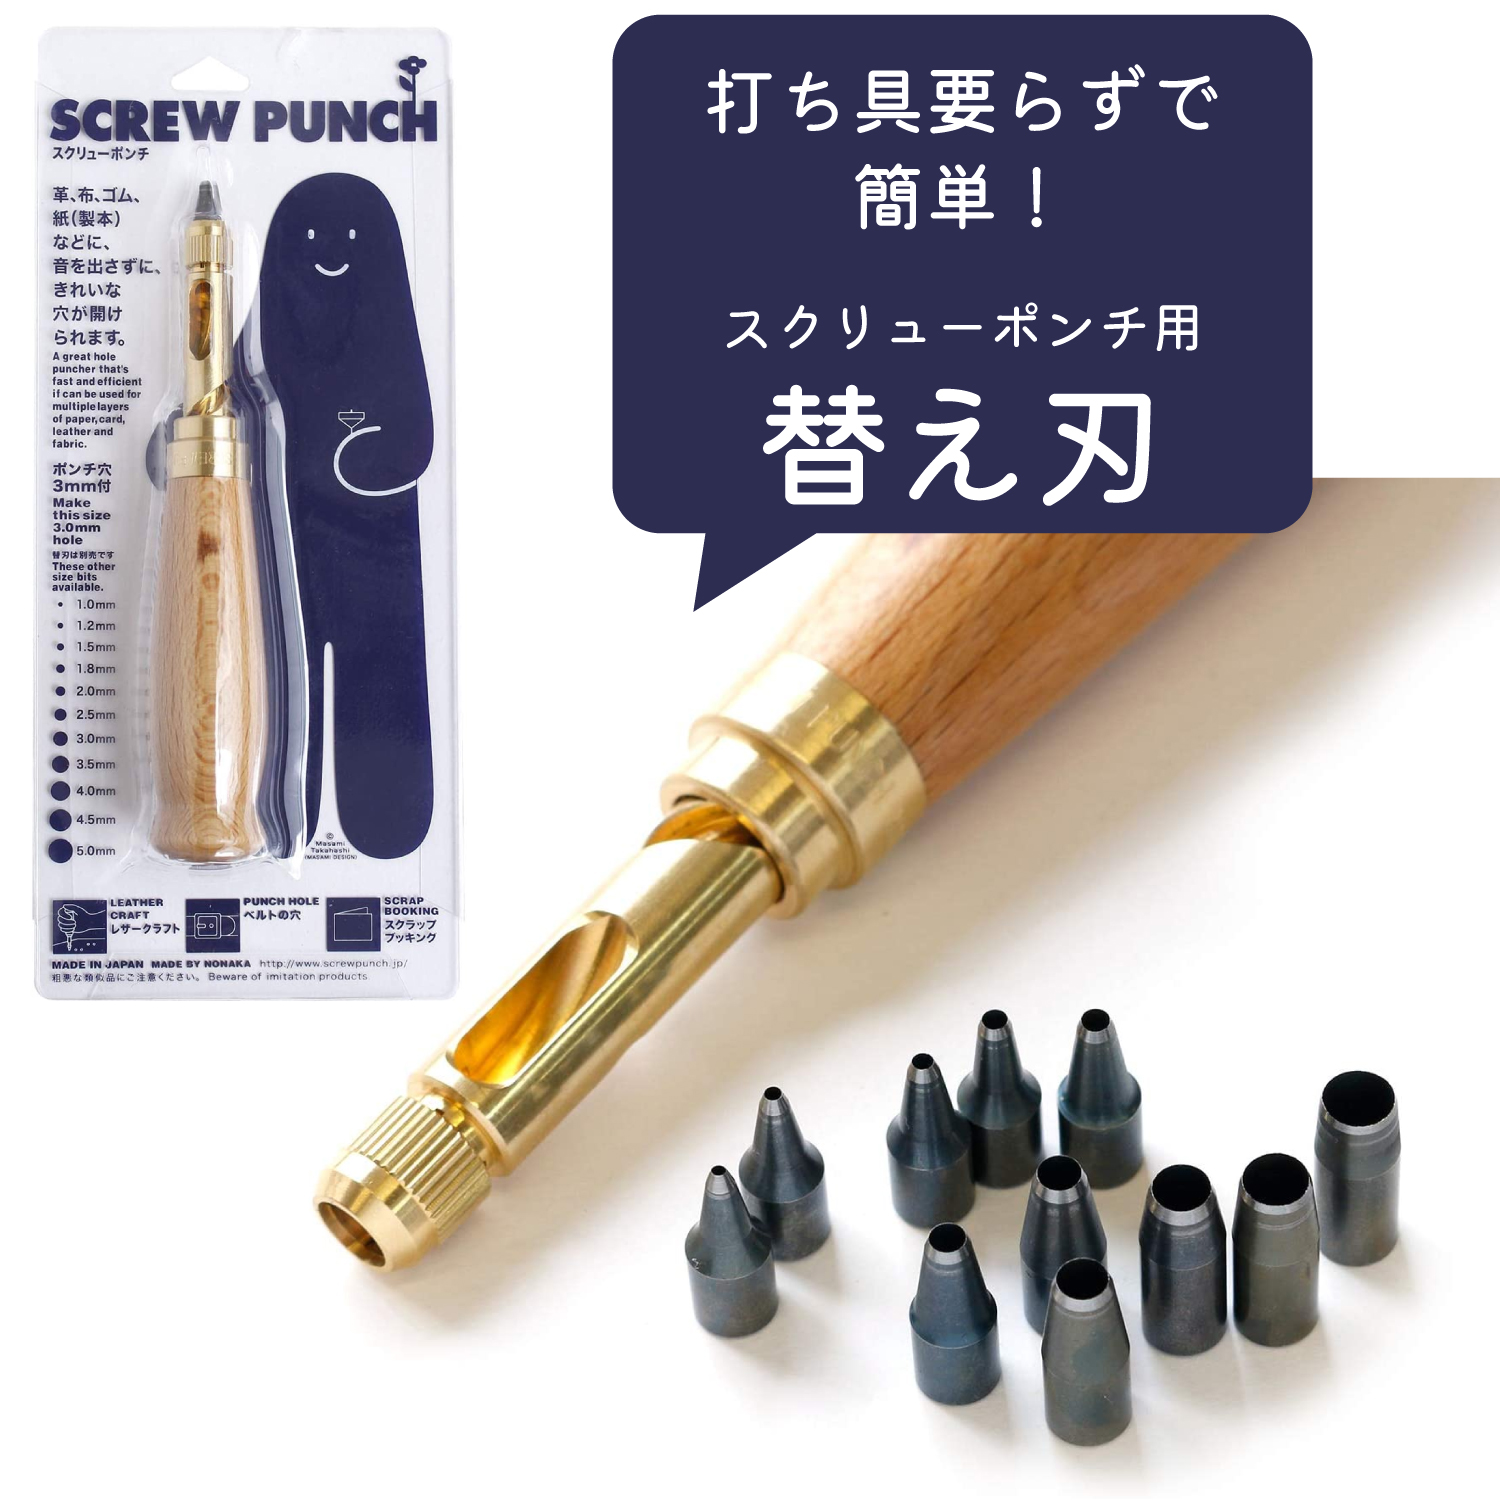 TK04211 New Screw Punch (pcs)